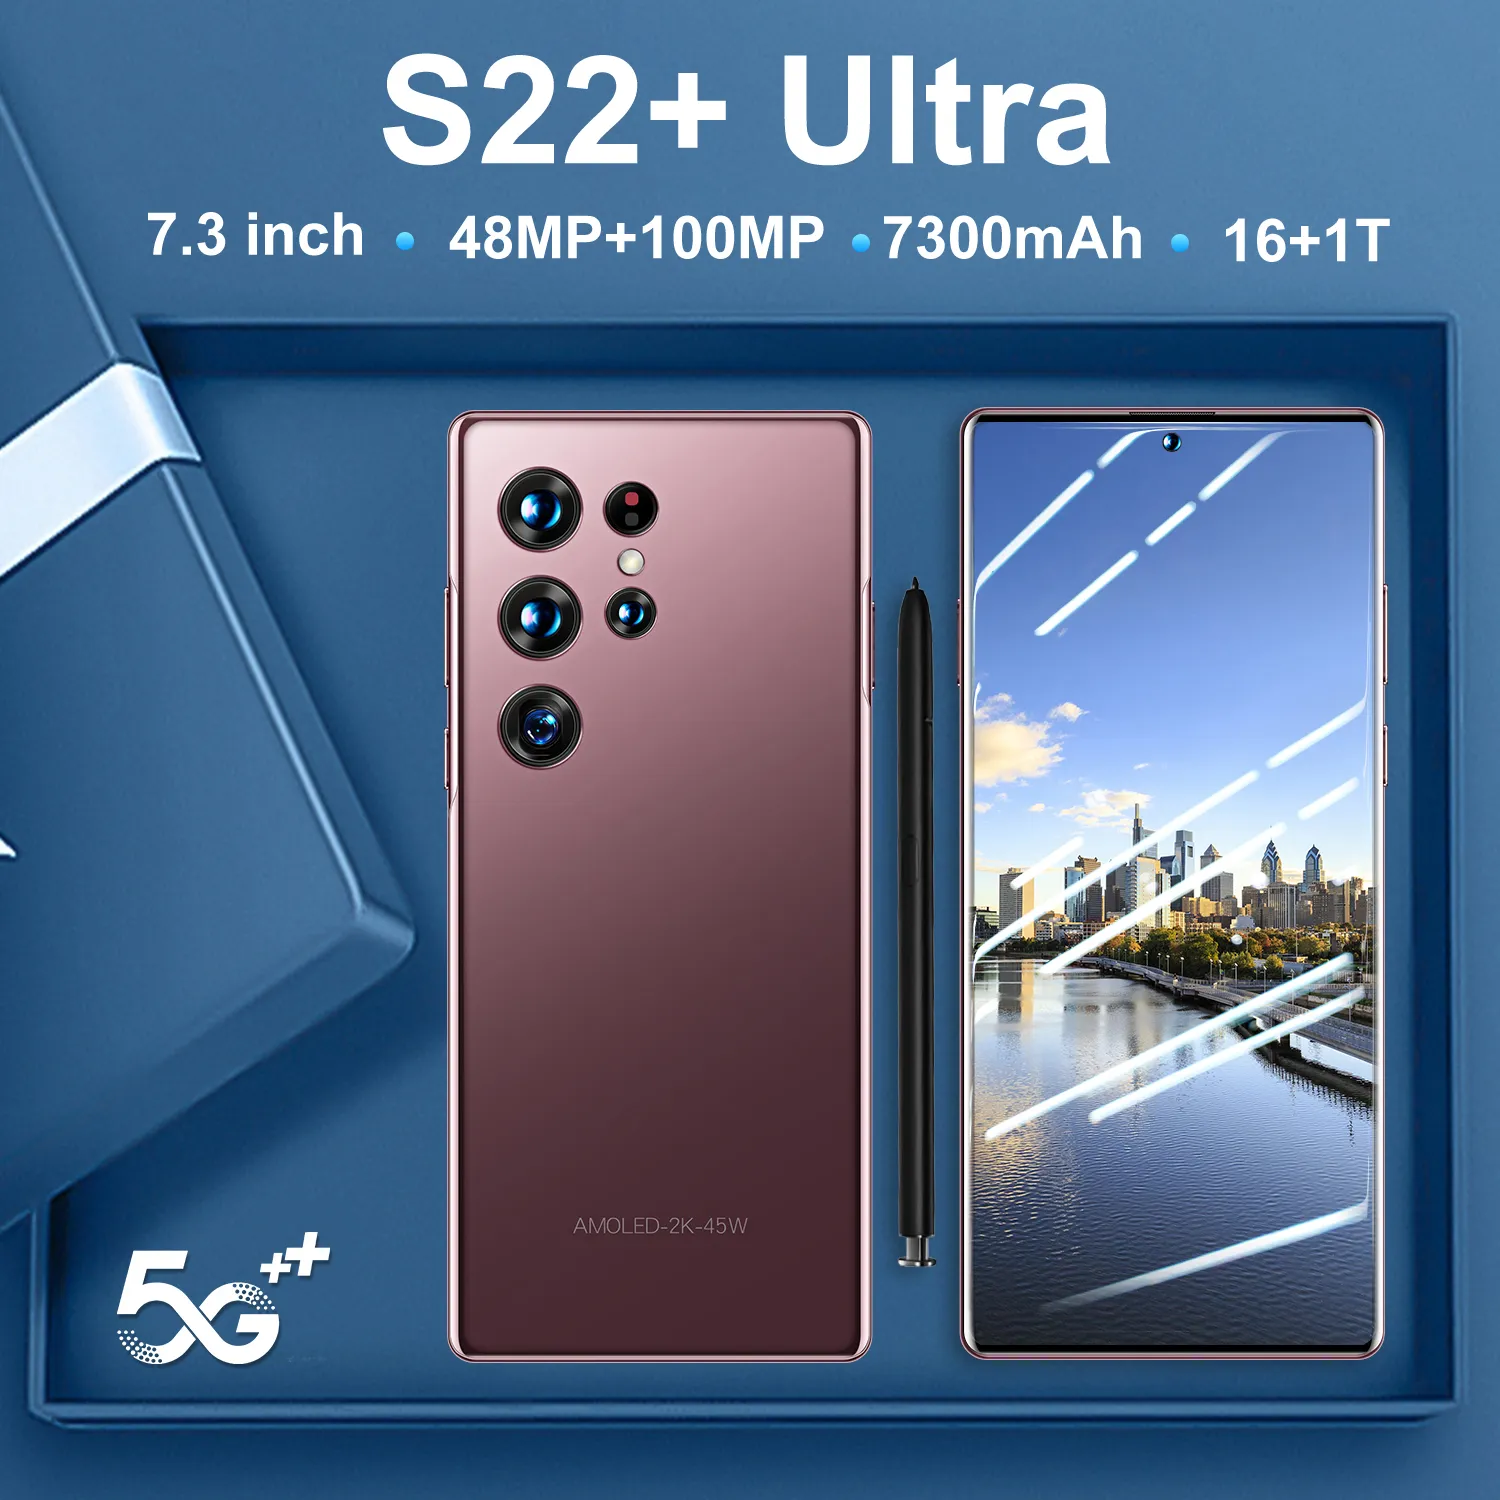 S22+Ultra Celular Global Version 5G Smartphone 16GB+1TB ROM 7.3 Inch 4G Andriod Mobile Phones Unlocked Celulares 7300mAh Phones